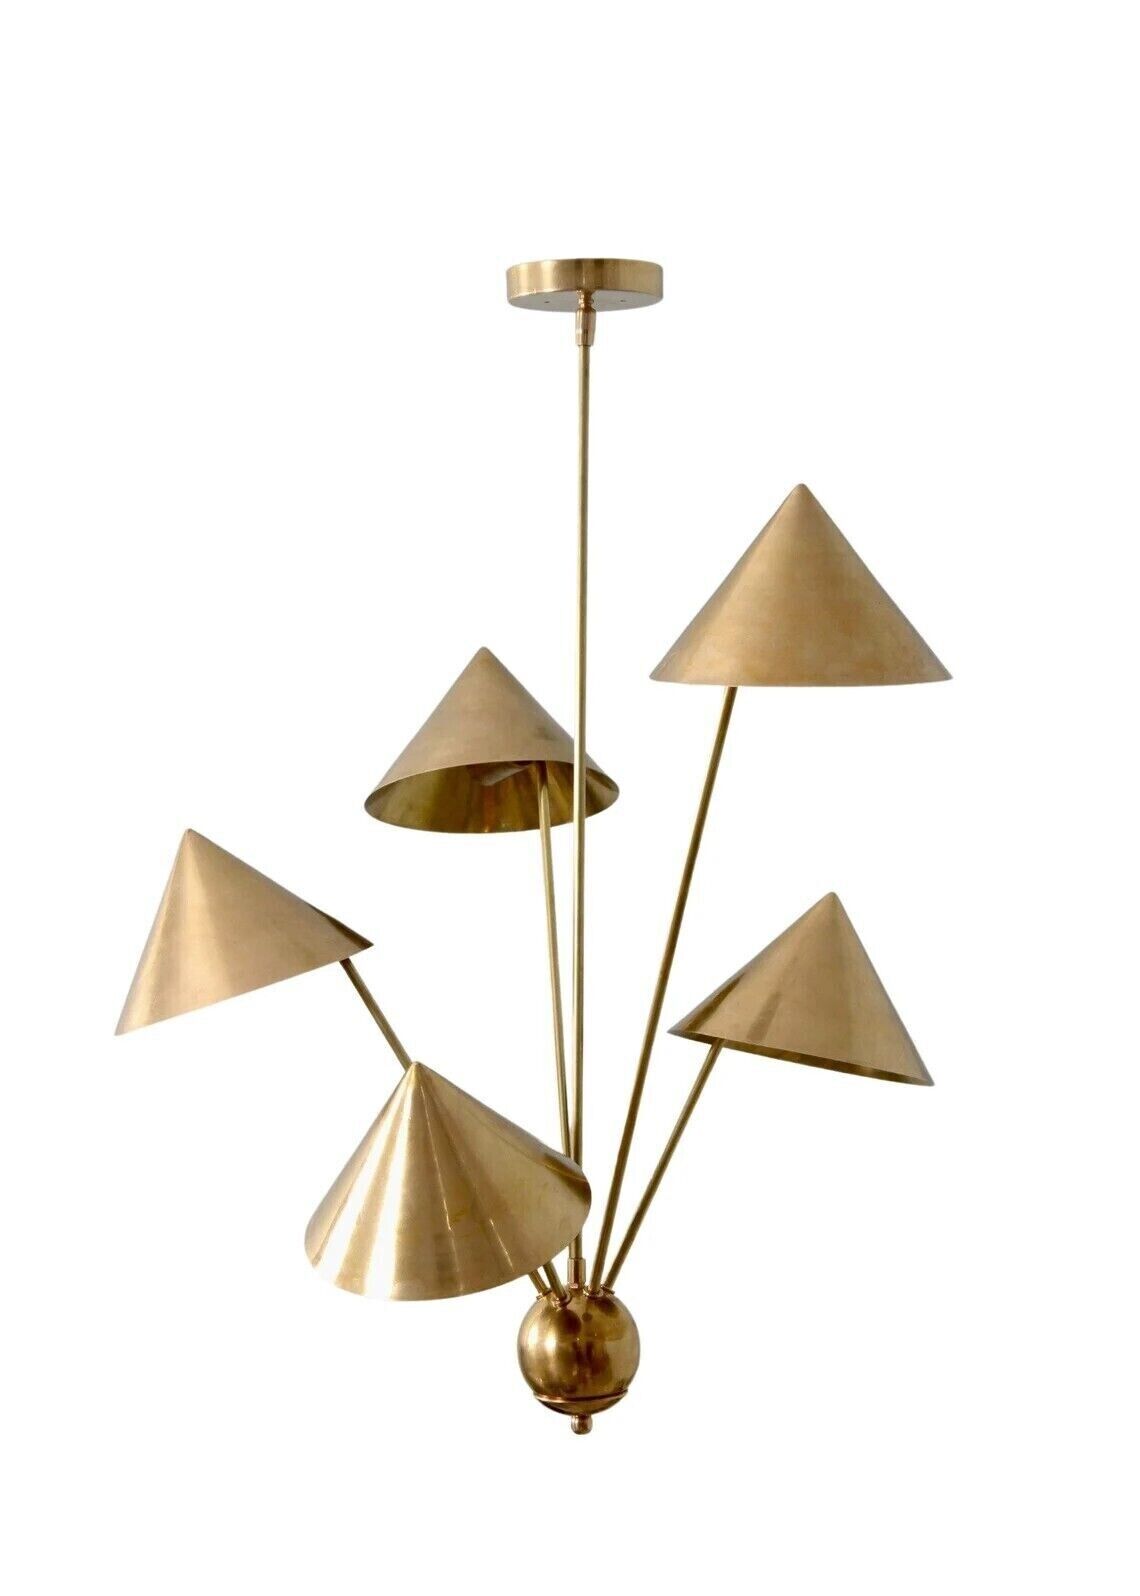 Mordern 5 Arm Light Art Deco Raw Brass Chandelier Ceiling Fixture Cone Handmade